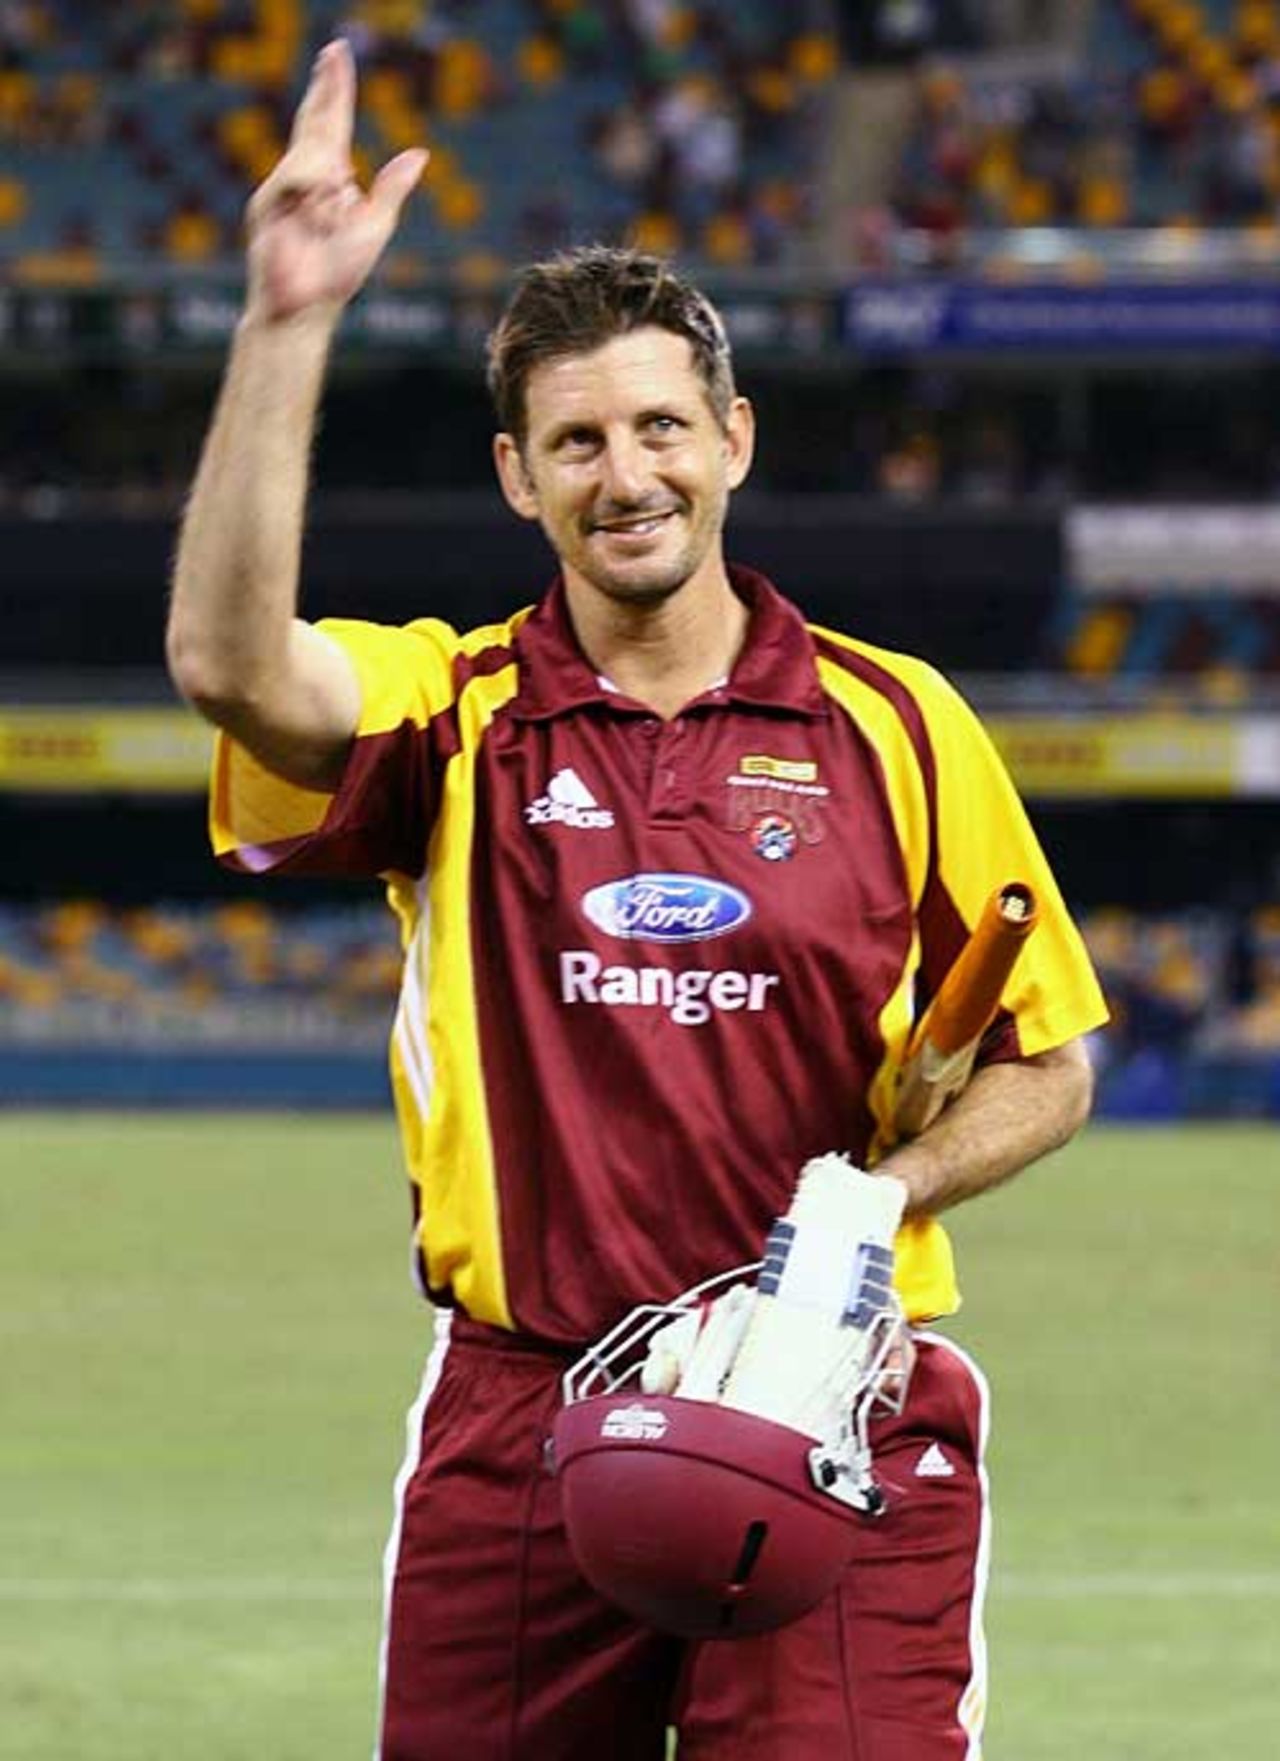 Michael Kasprowicz waves goodbye after his final innings, Queensland v Western Australia, FR Cup, Brisbane, February 16, 2008